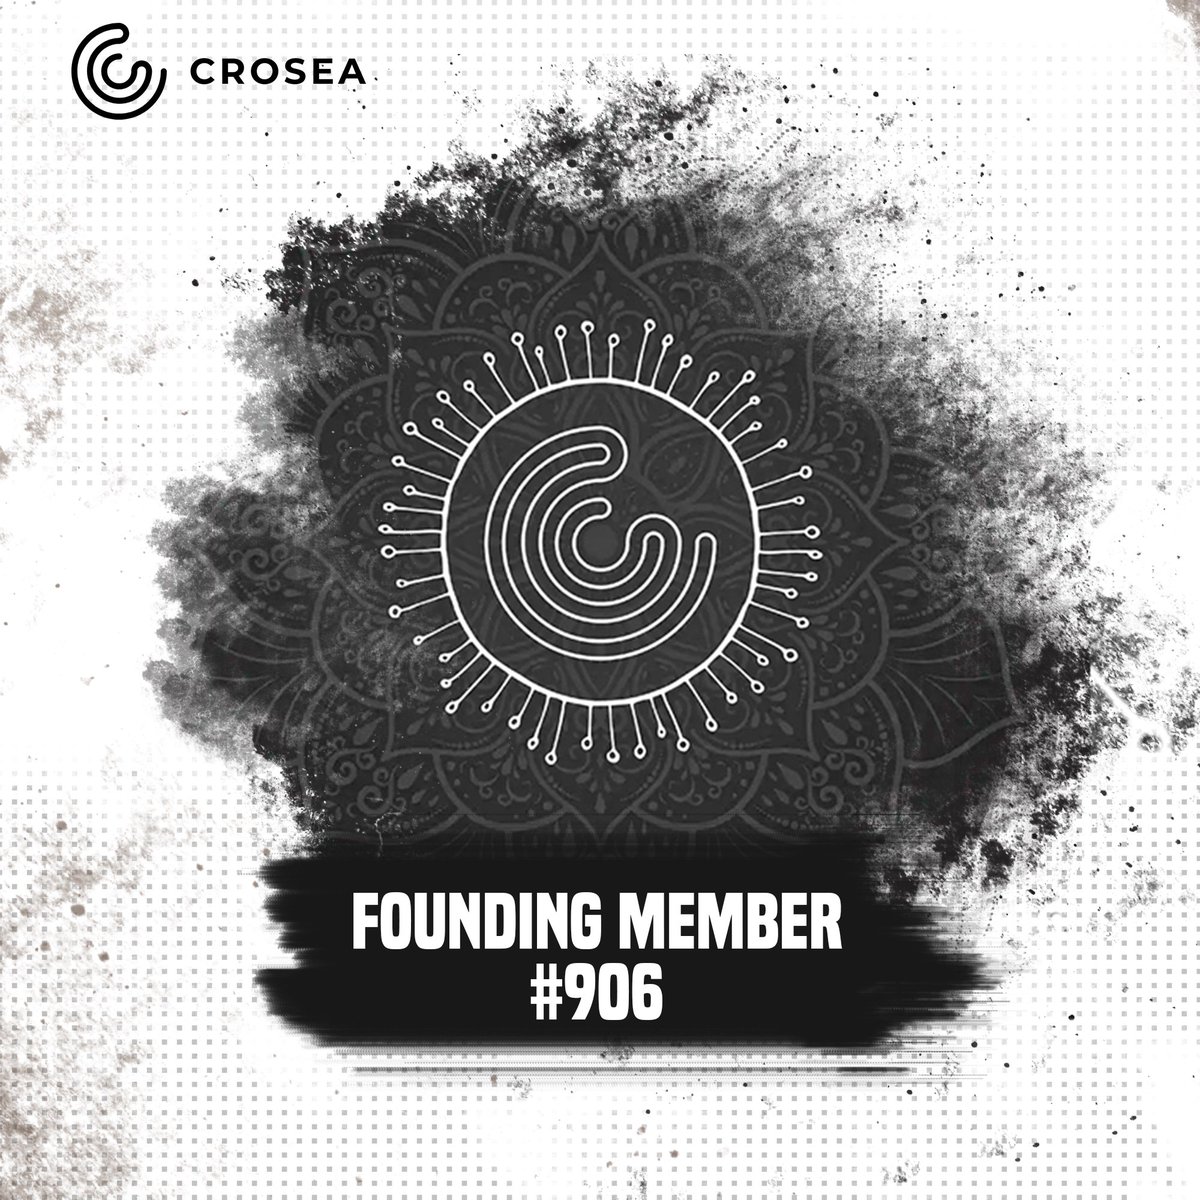 Crosea - Founding Member #906 Just Sold for 940.0 #CRO Listing crosea.io/market/69569 #Crosea #CronosNFT #CroFam #Cro #Cronos #NFTMarketplace